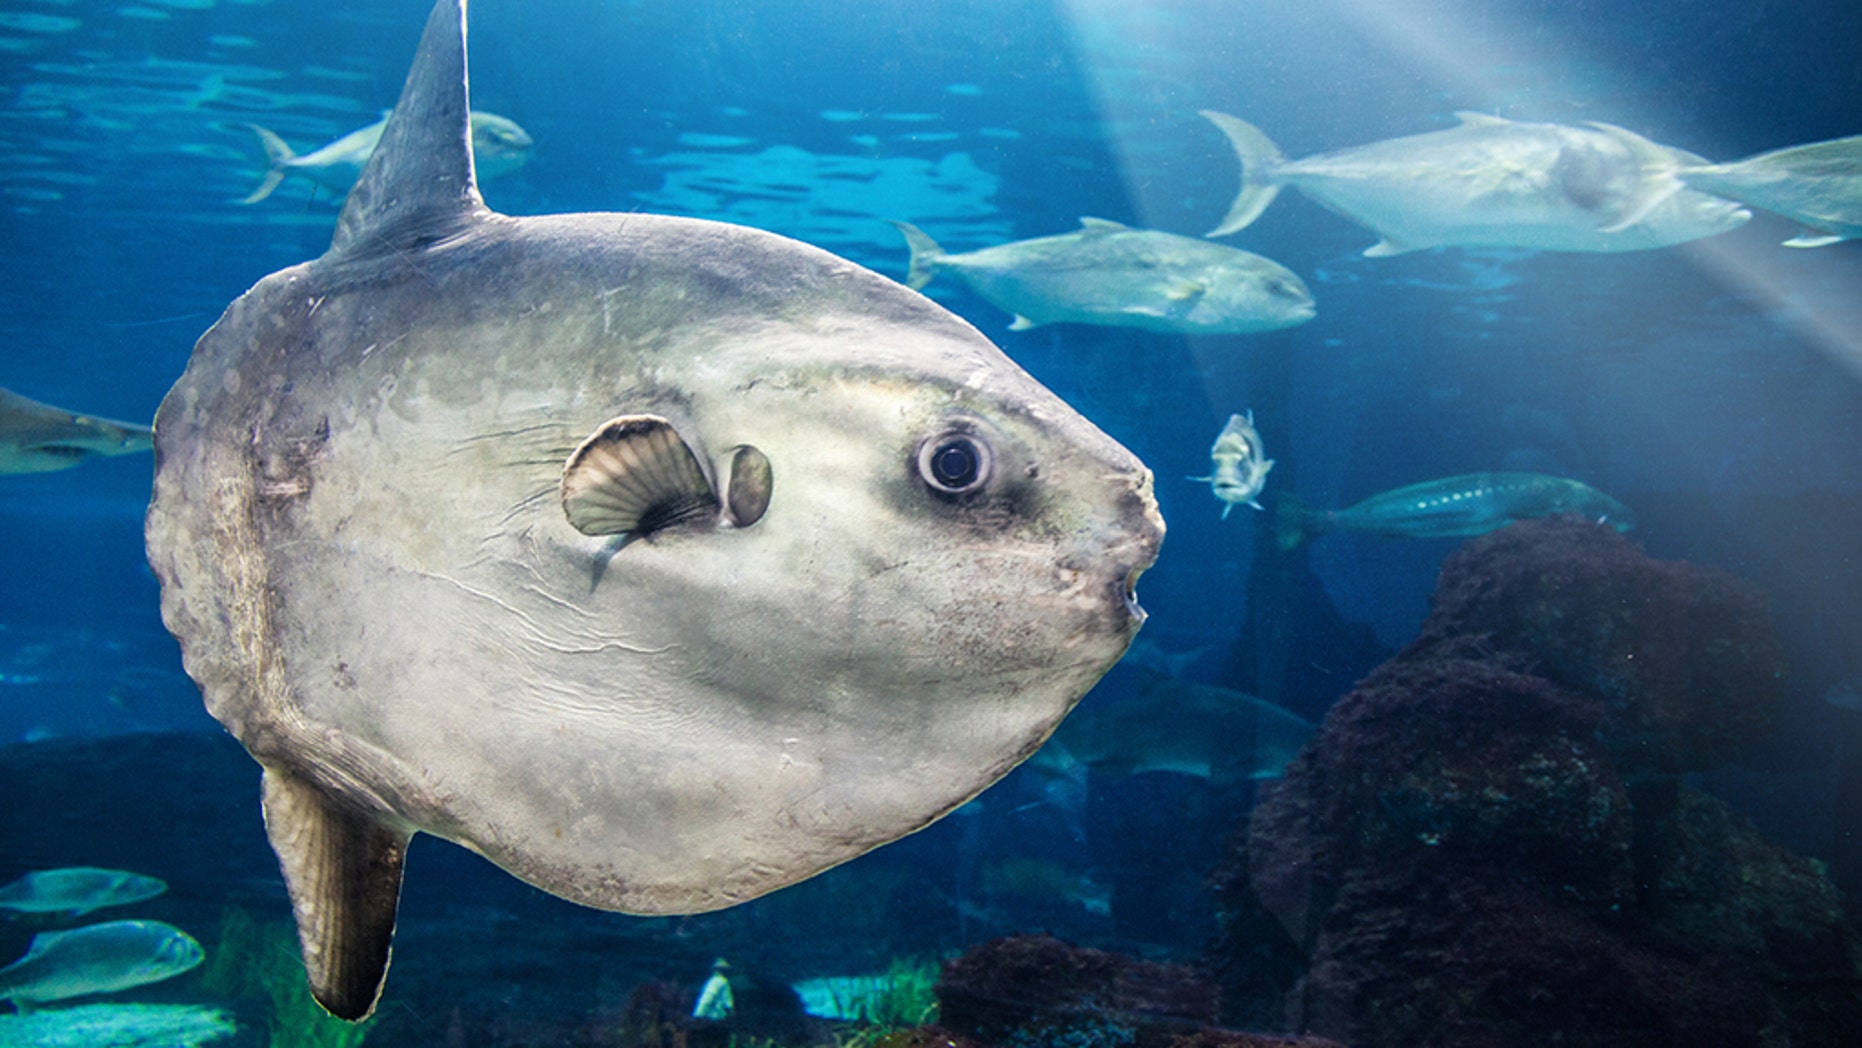 A close-up of a Mola Mola (Ocean Sunfish).